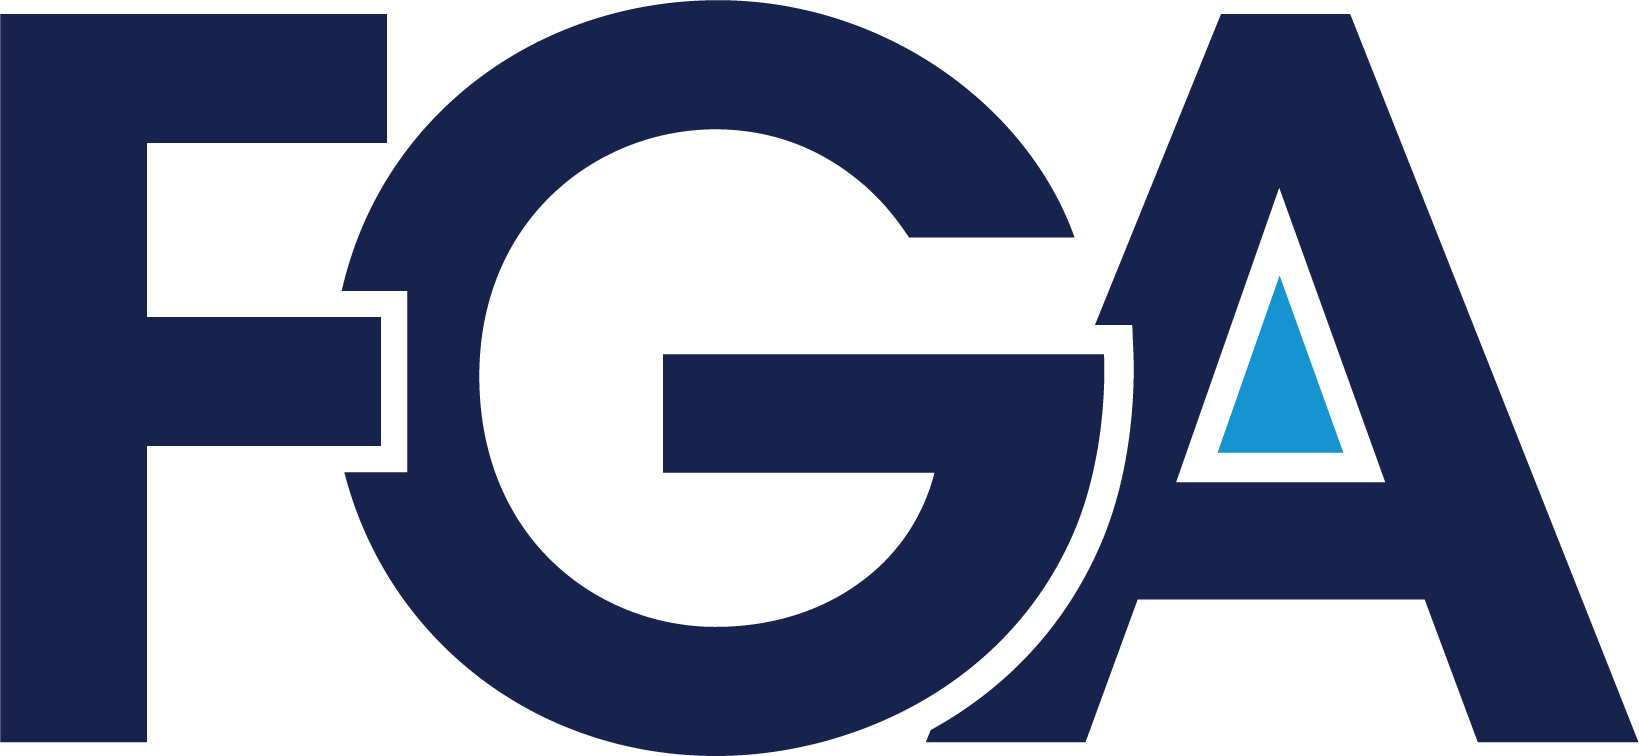 Foundation for Government Accountability logo